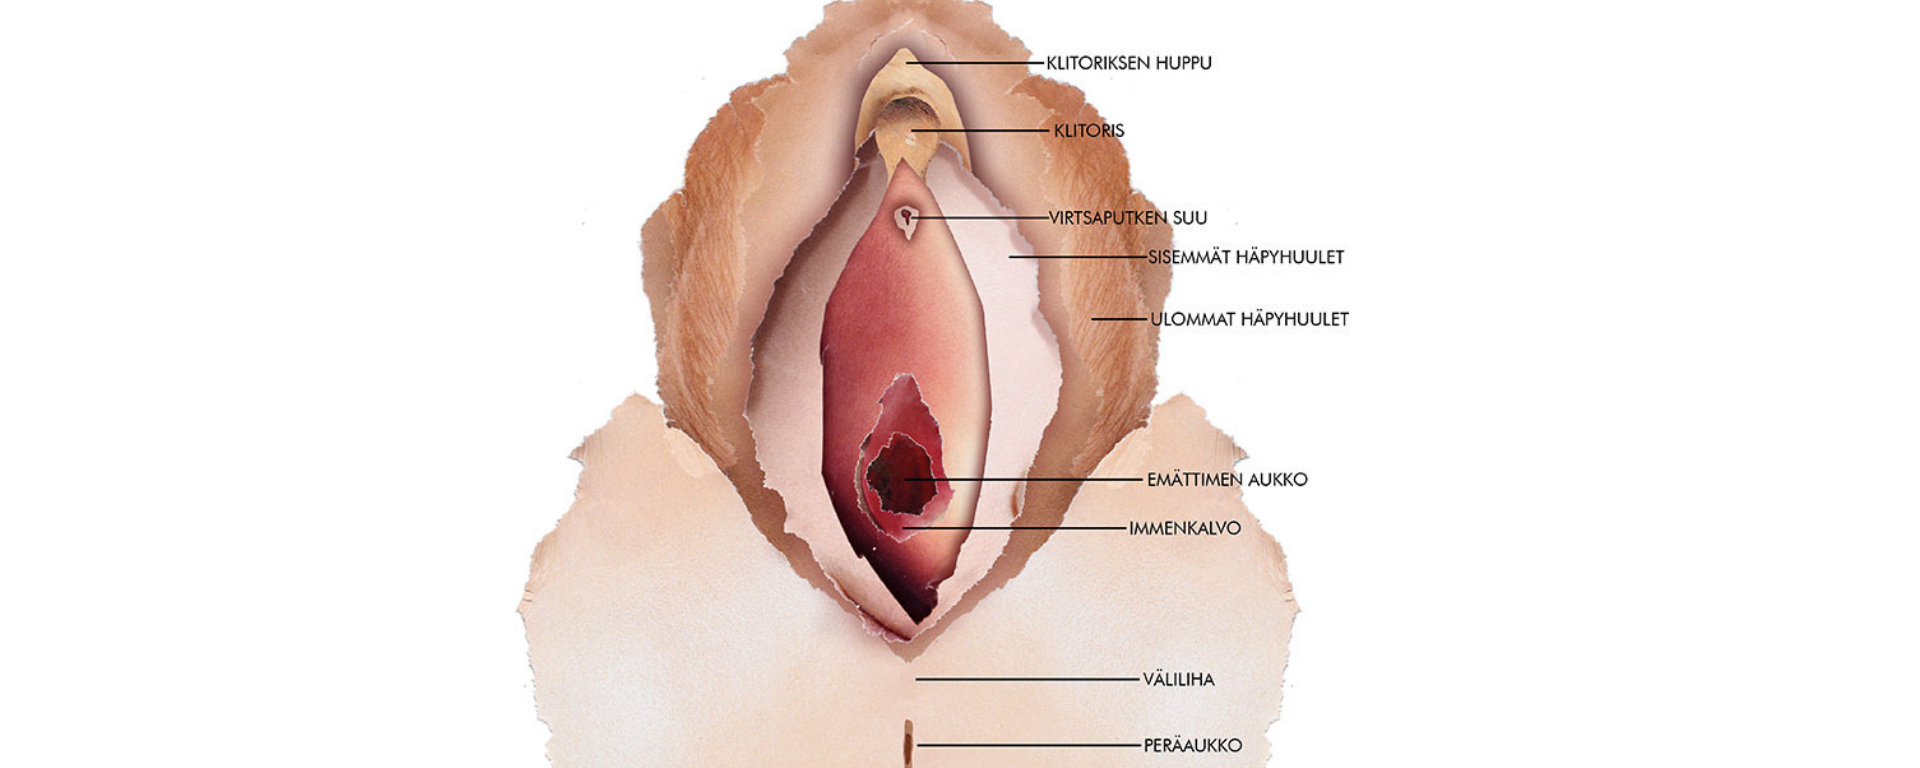 Vulvan anatomia -piirroskuva